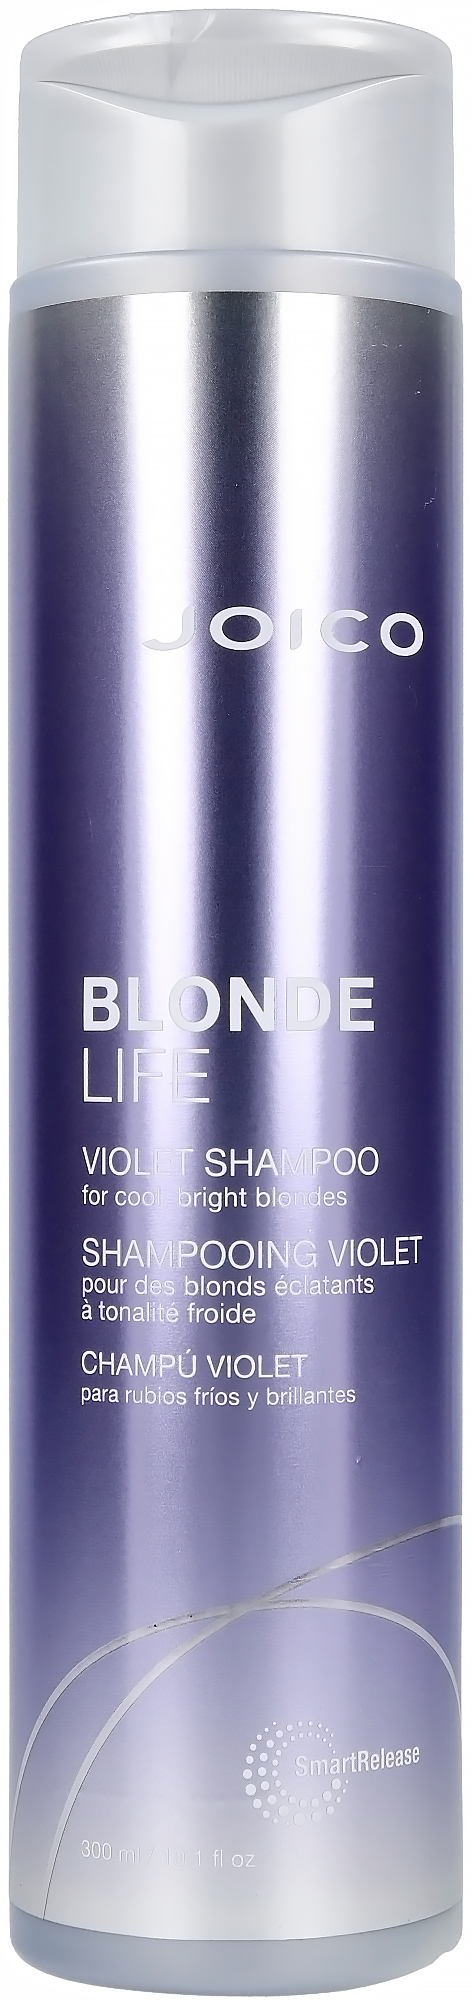 Joico Blonde Life 300 | lyko.com